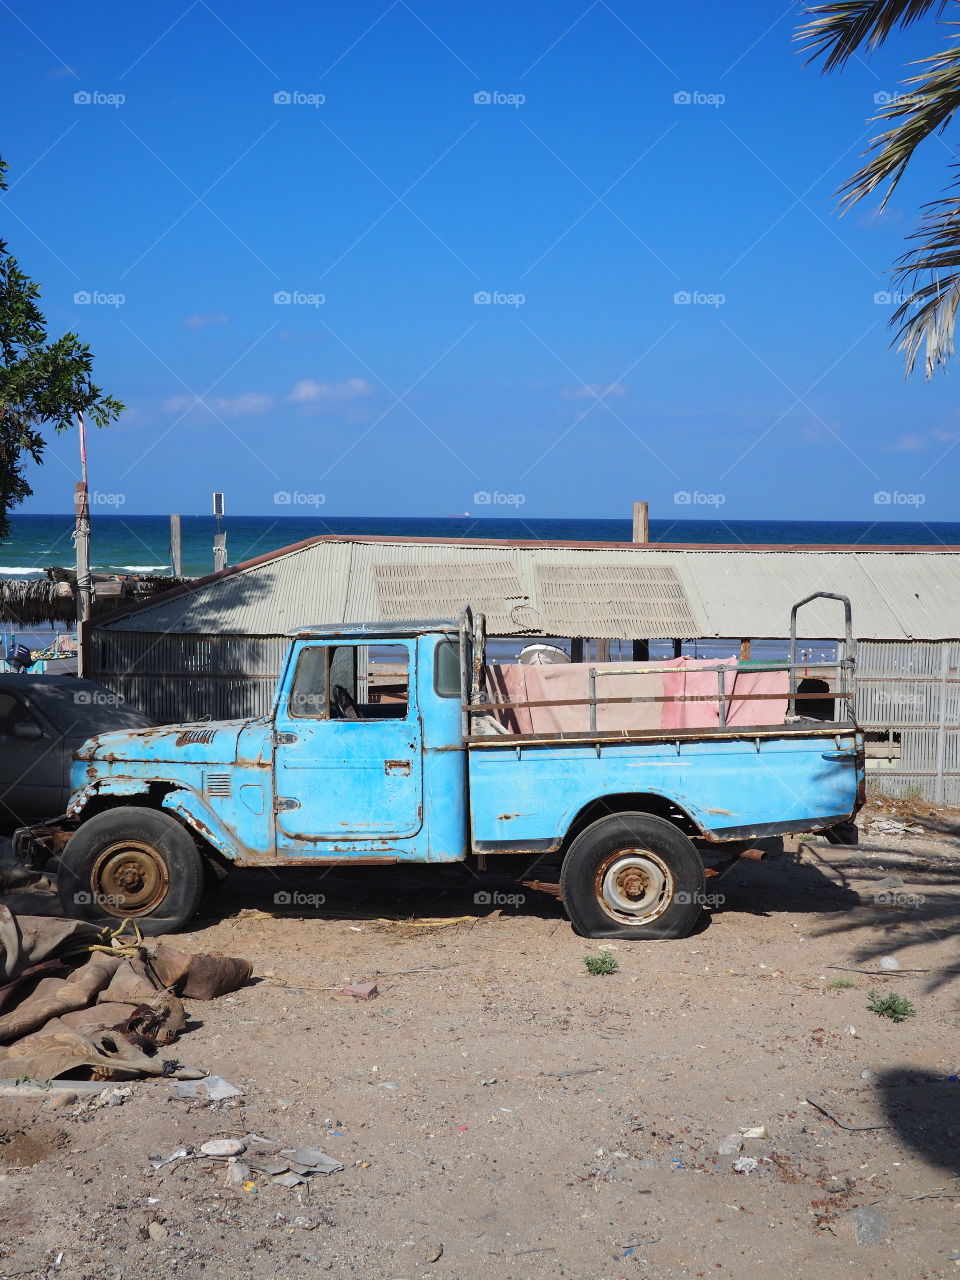 Blue abandoned vehicle on the beach